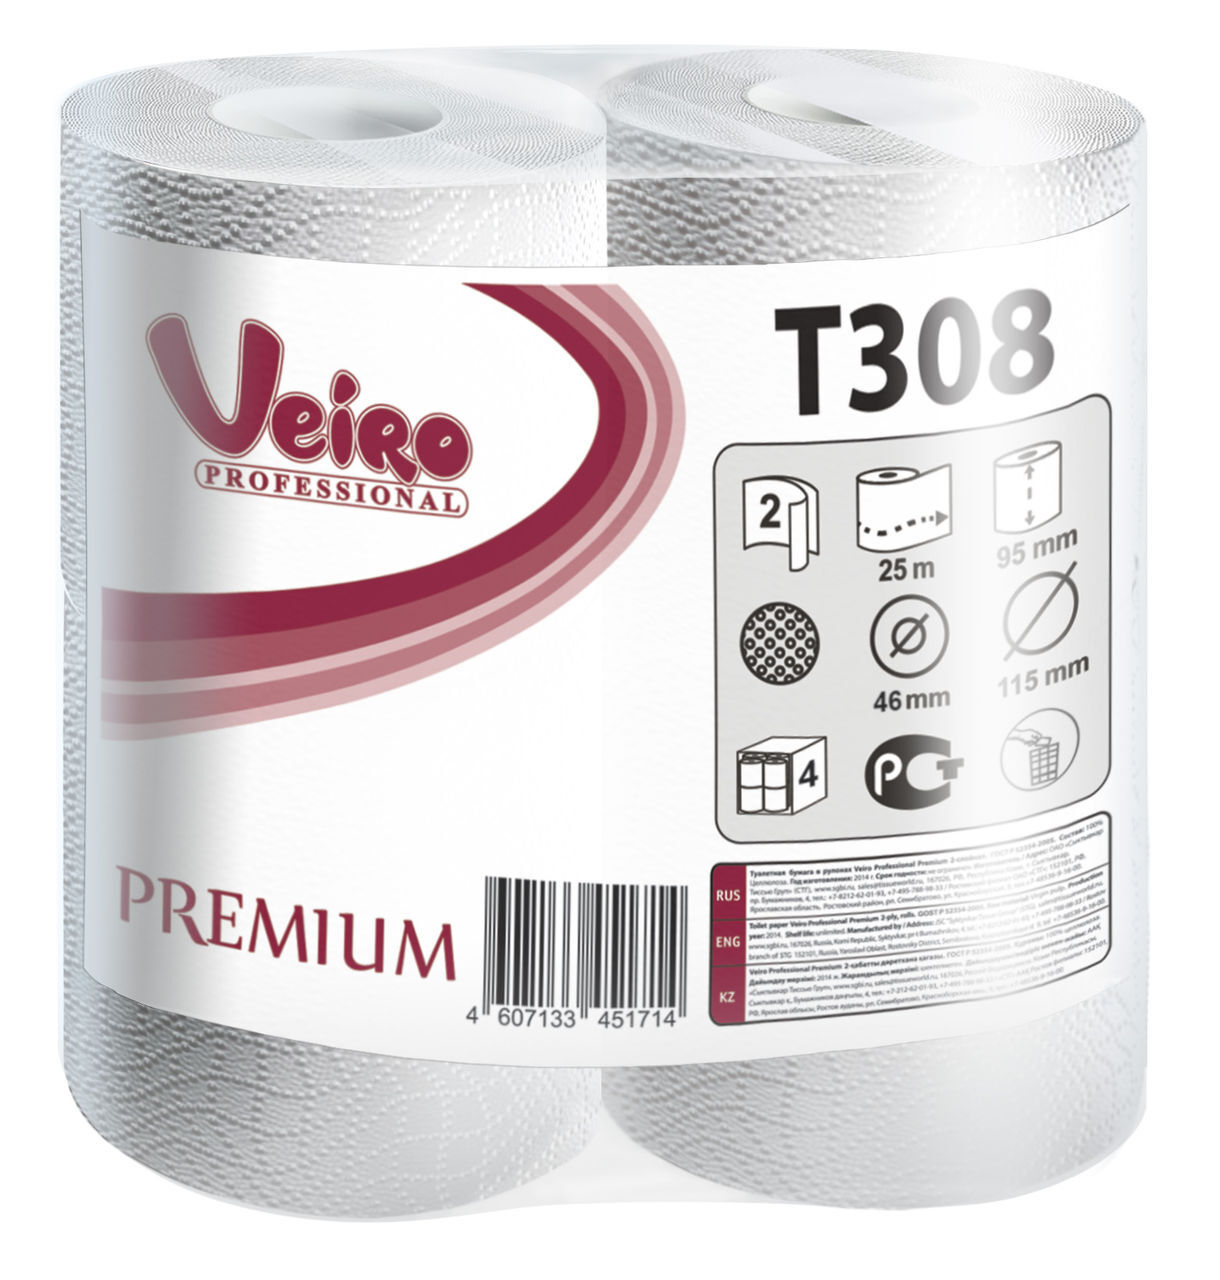 Veiro Professional Premium T308 Туалетная бумага двухслойная 46x115 мм